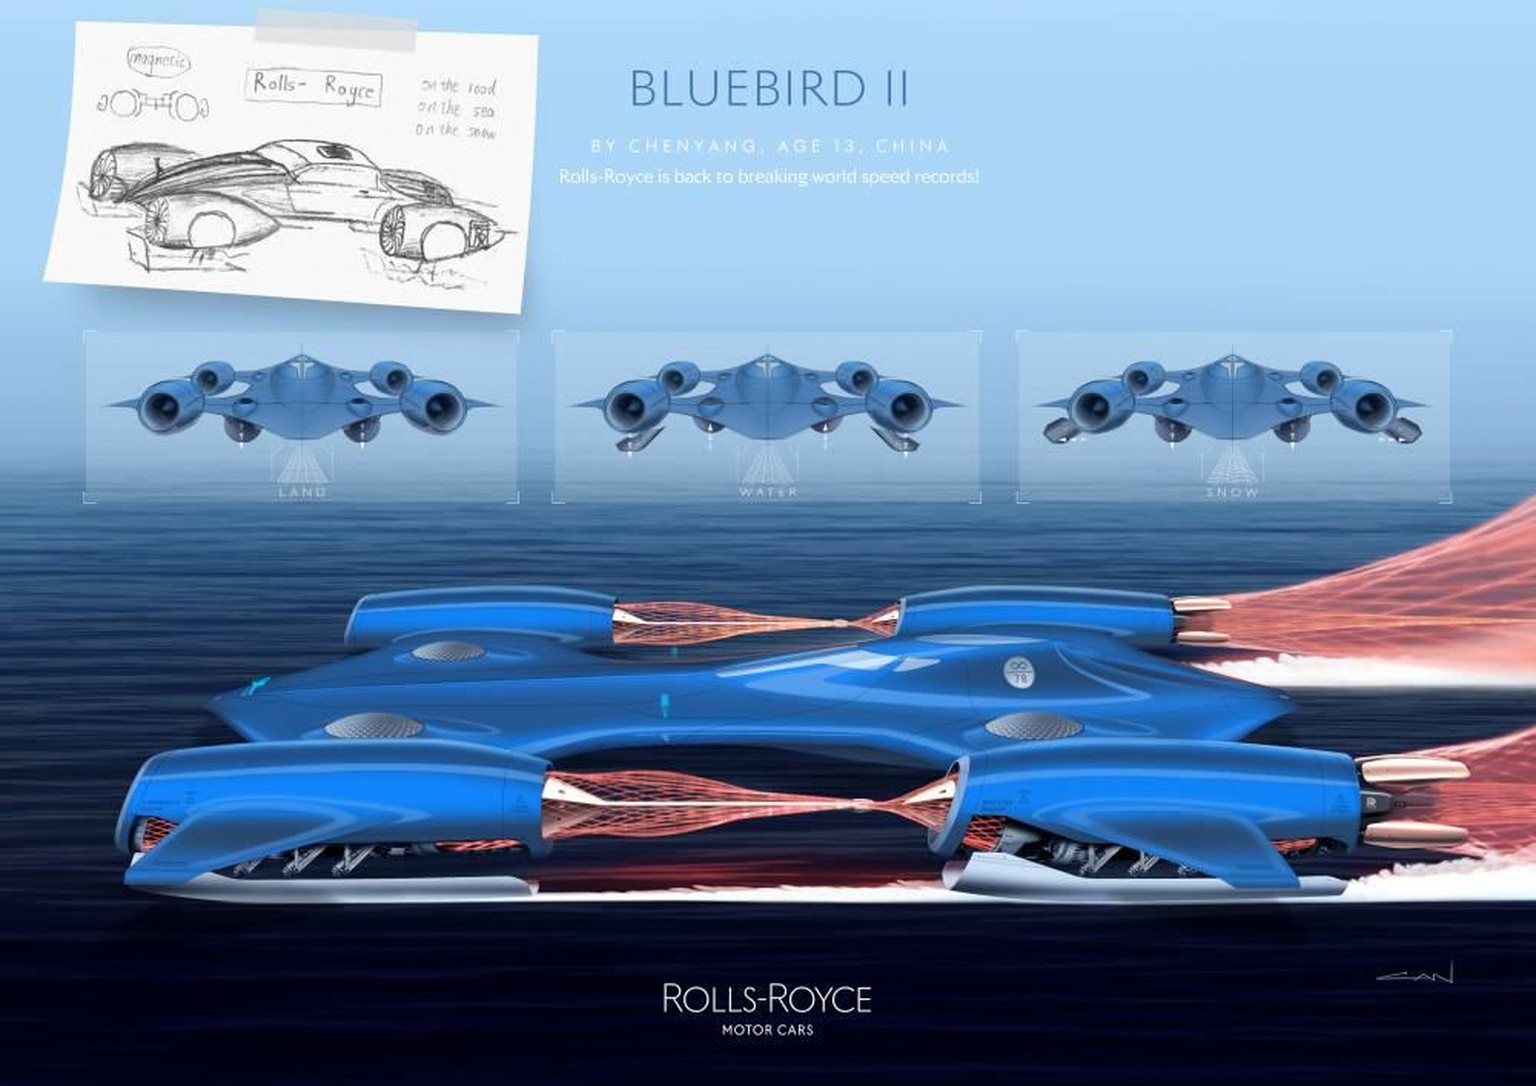 rolls royce kinderdesigns Rolls-Royce Bluebird II by Chenyang, age 13, China

https://rolls-royceyoungdesignercompetition.com/